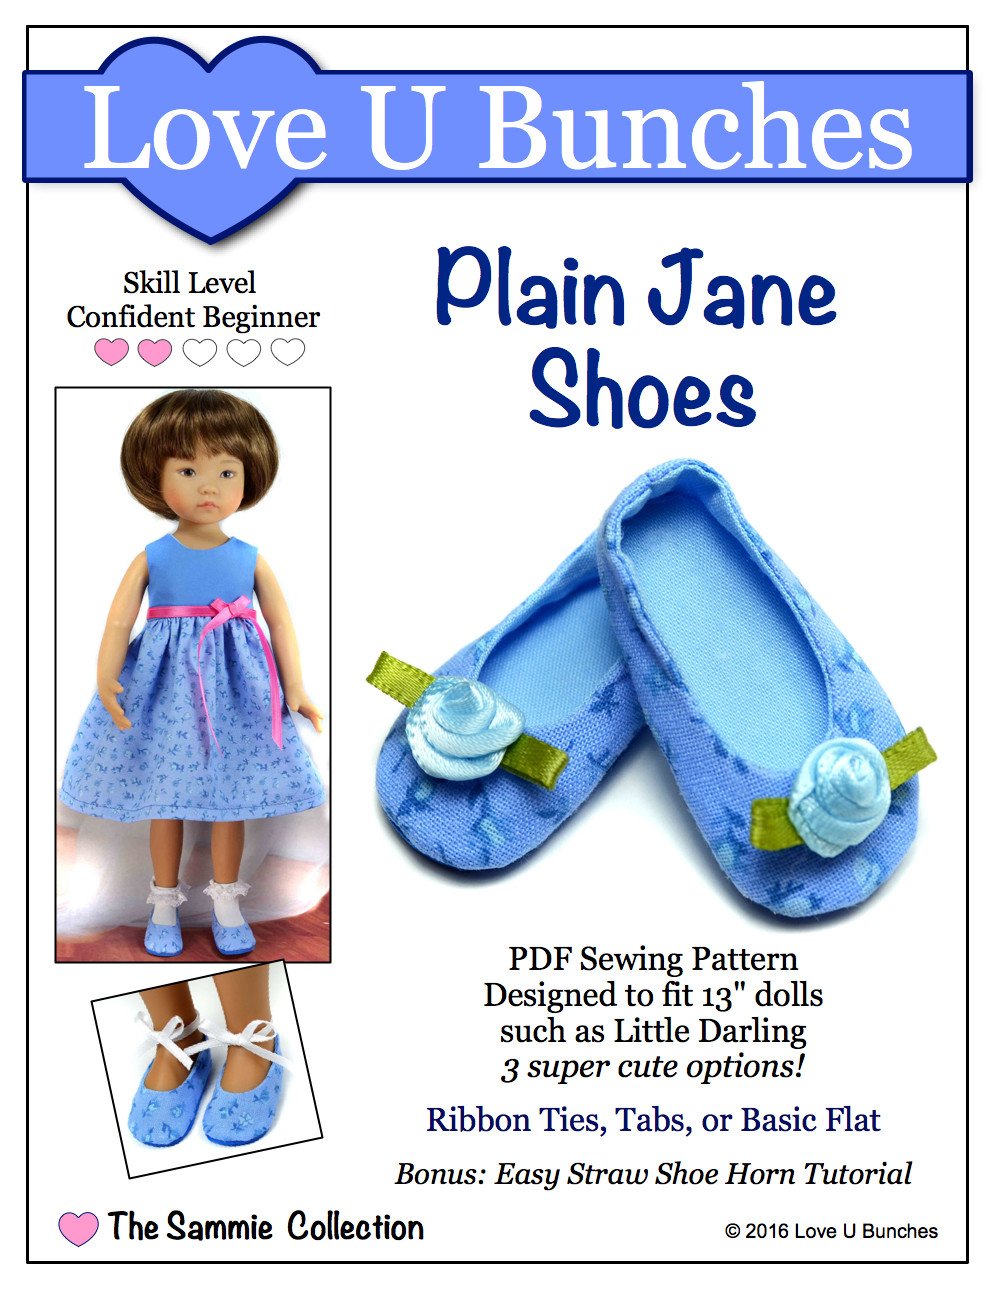 Plain Jane Shoes for Little Darling Dolls